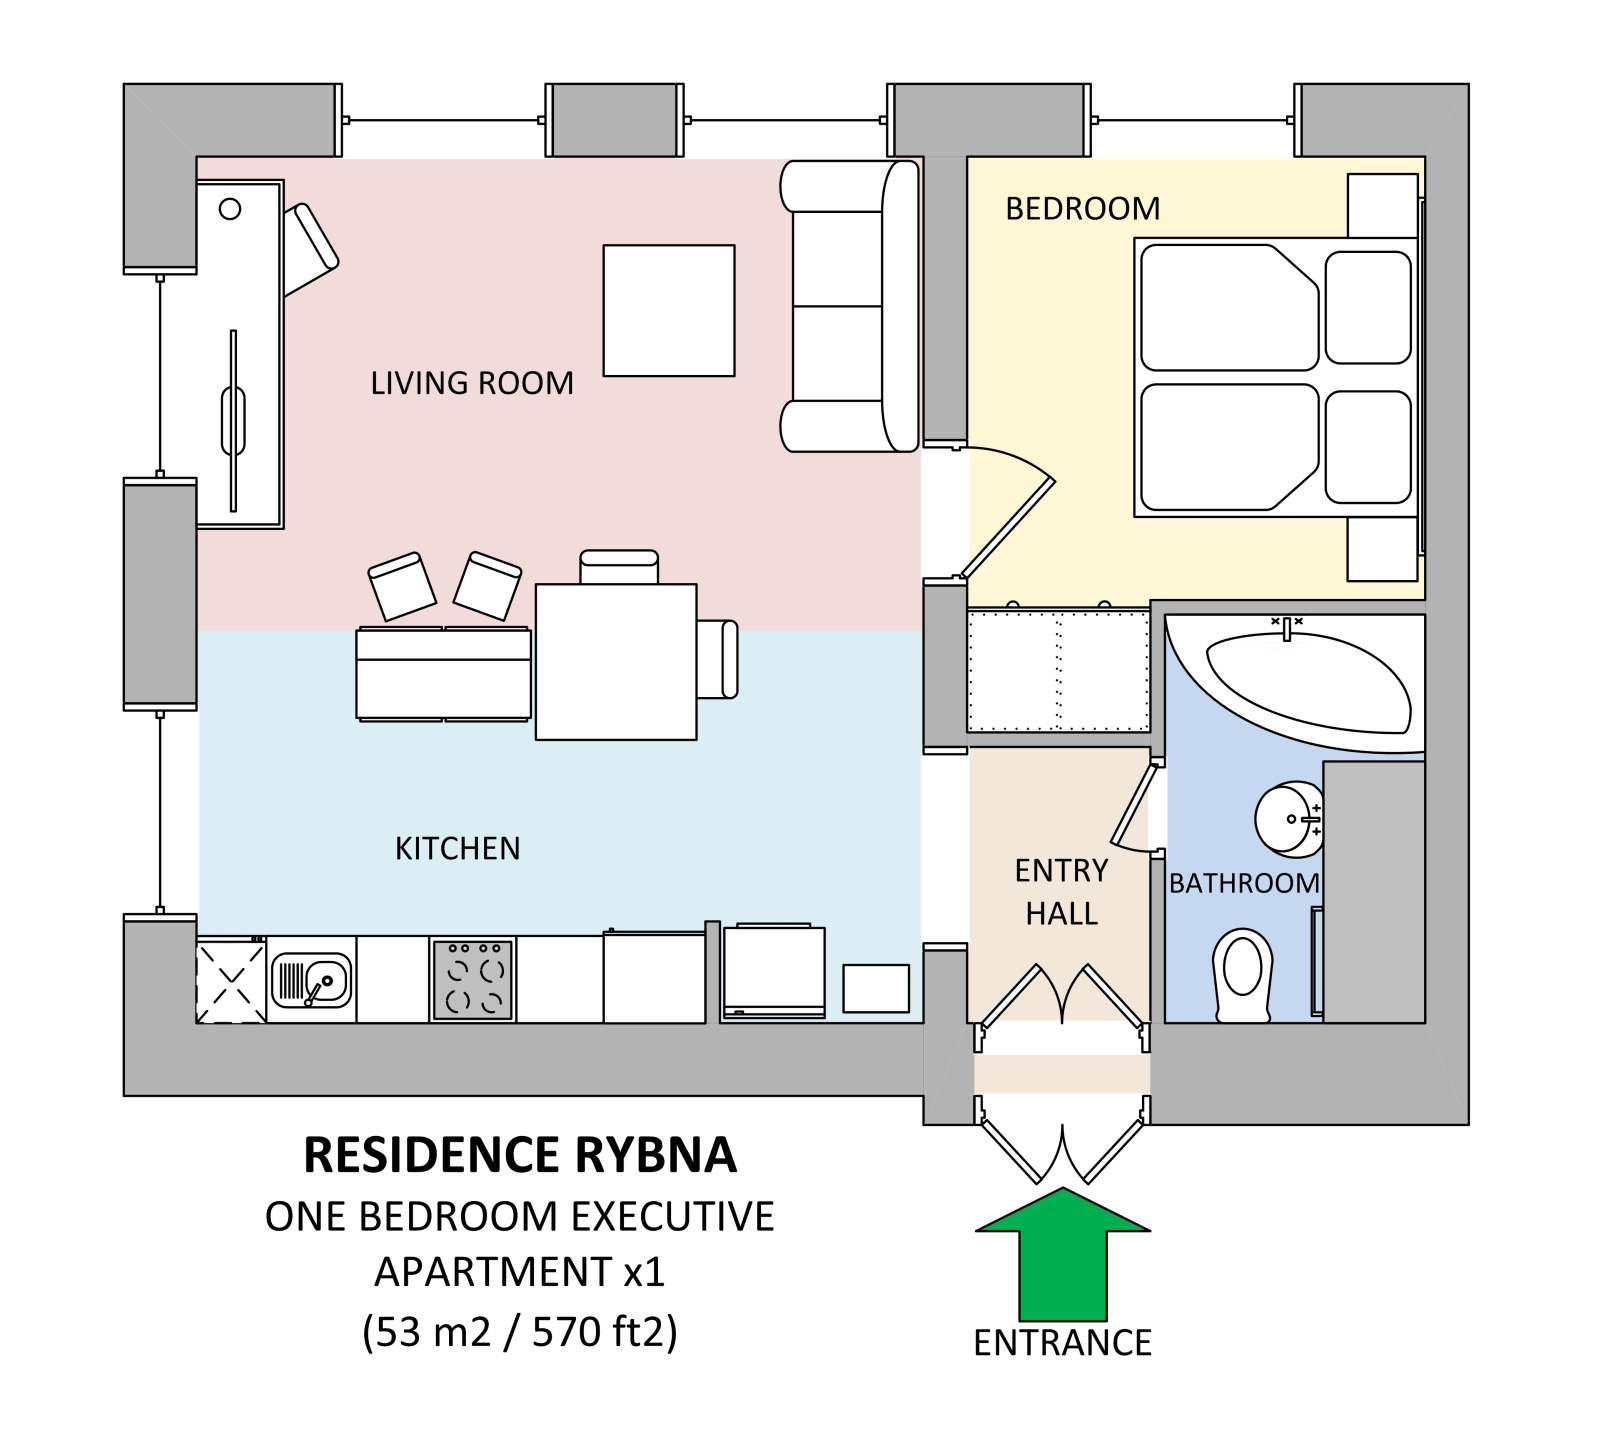 Floorplan of apartment x1 in Rybna Residence in Prague